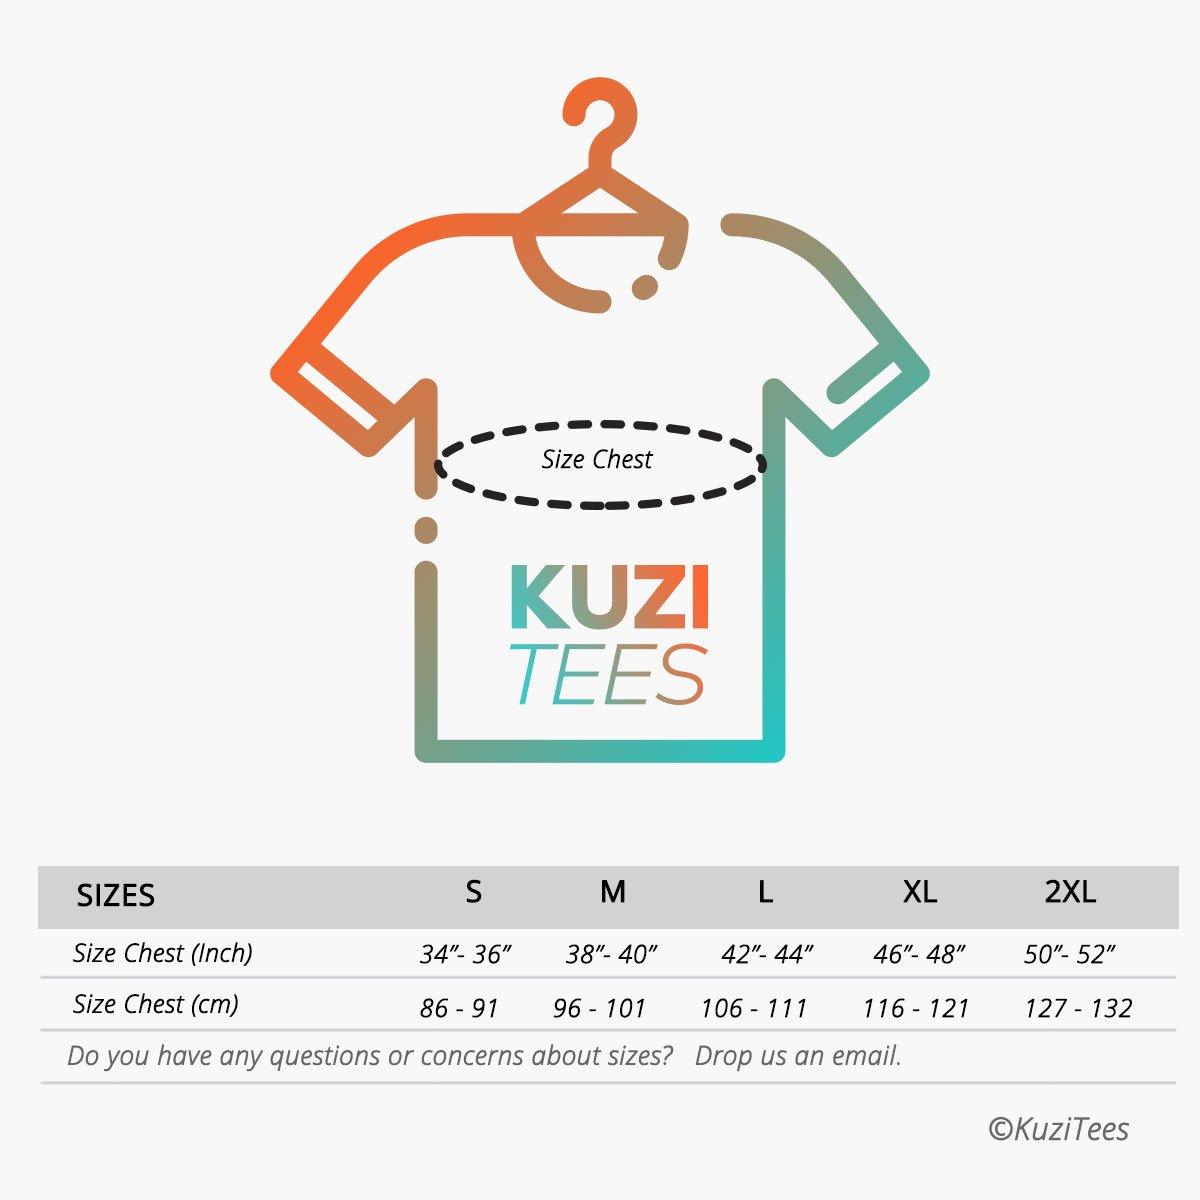 GTFO PLZ THX Typography T-Shirt - Kuzi Tees